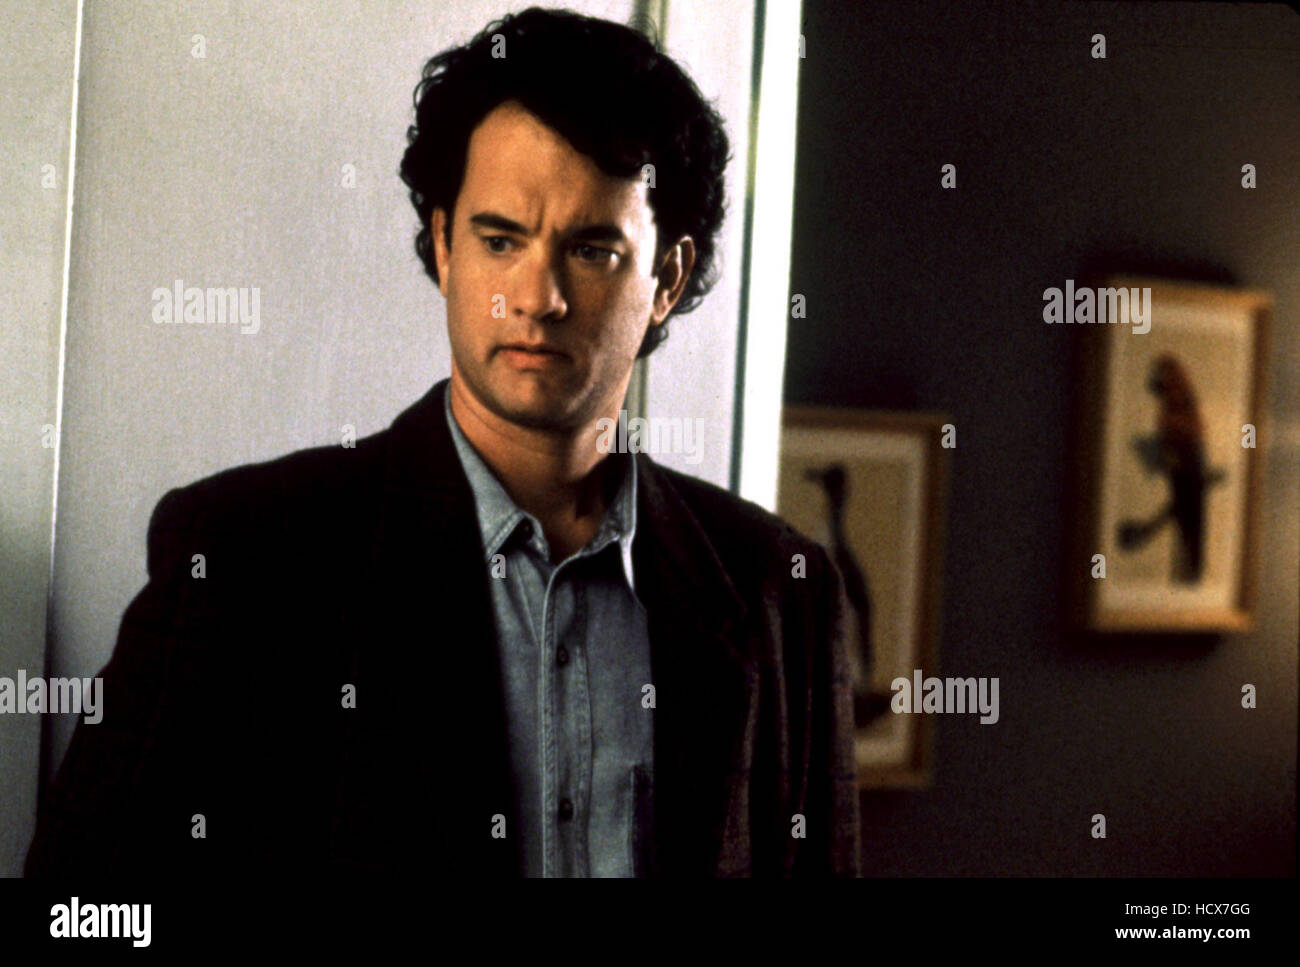 SLEEPLESS IN SEATTLE, Tom Hanks, 1993 Stock Photo